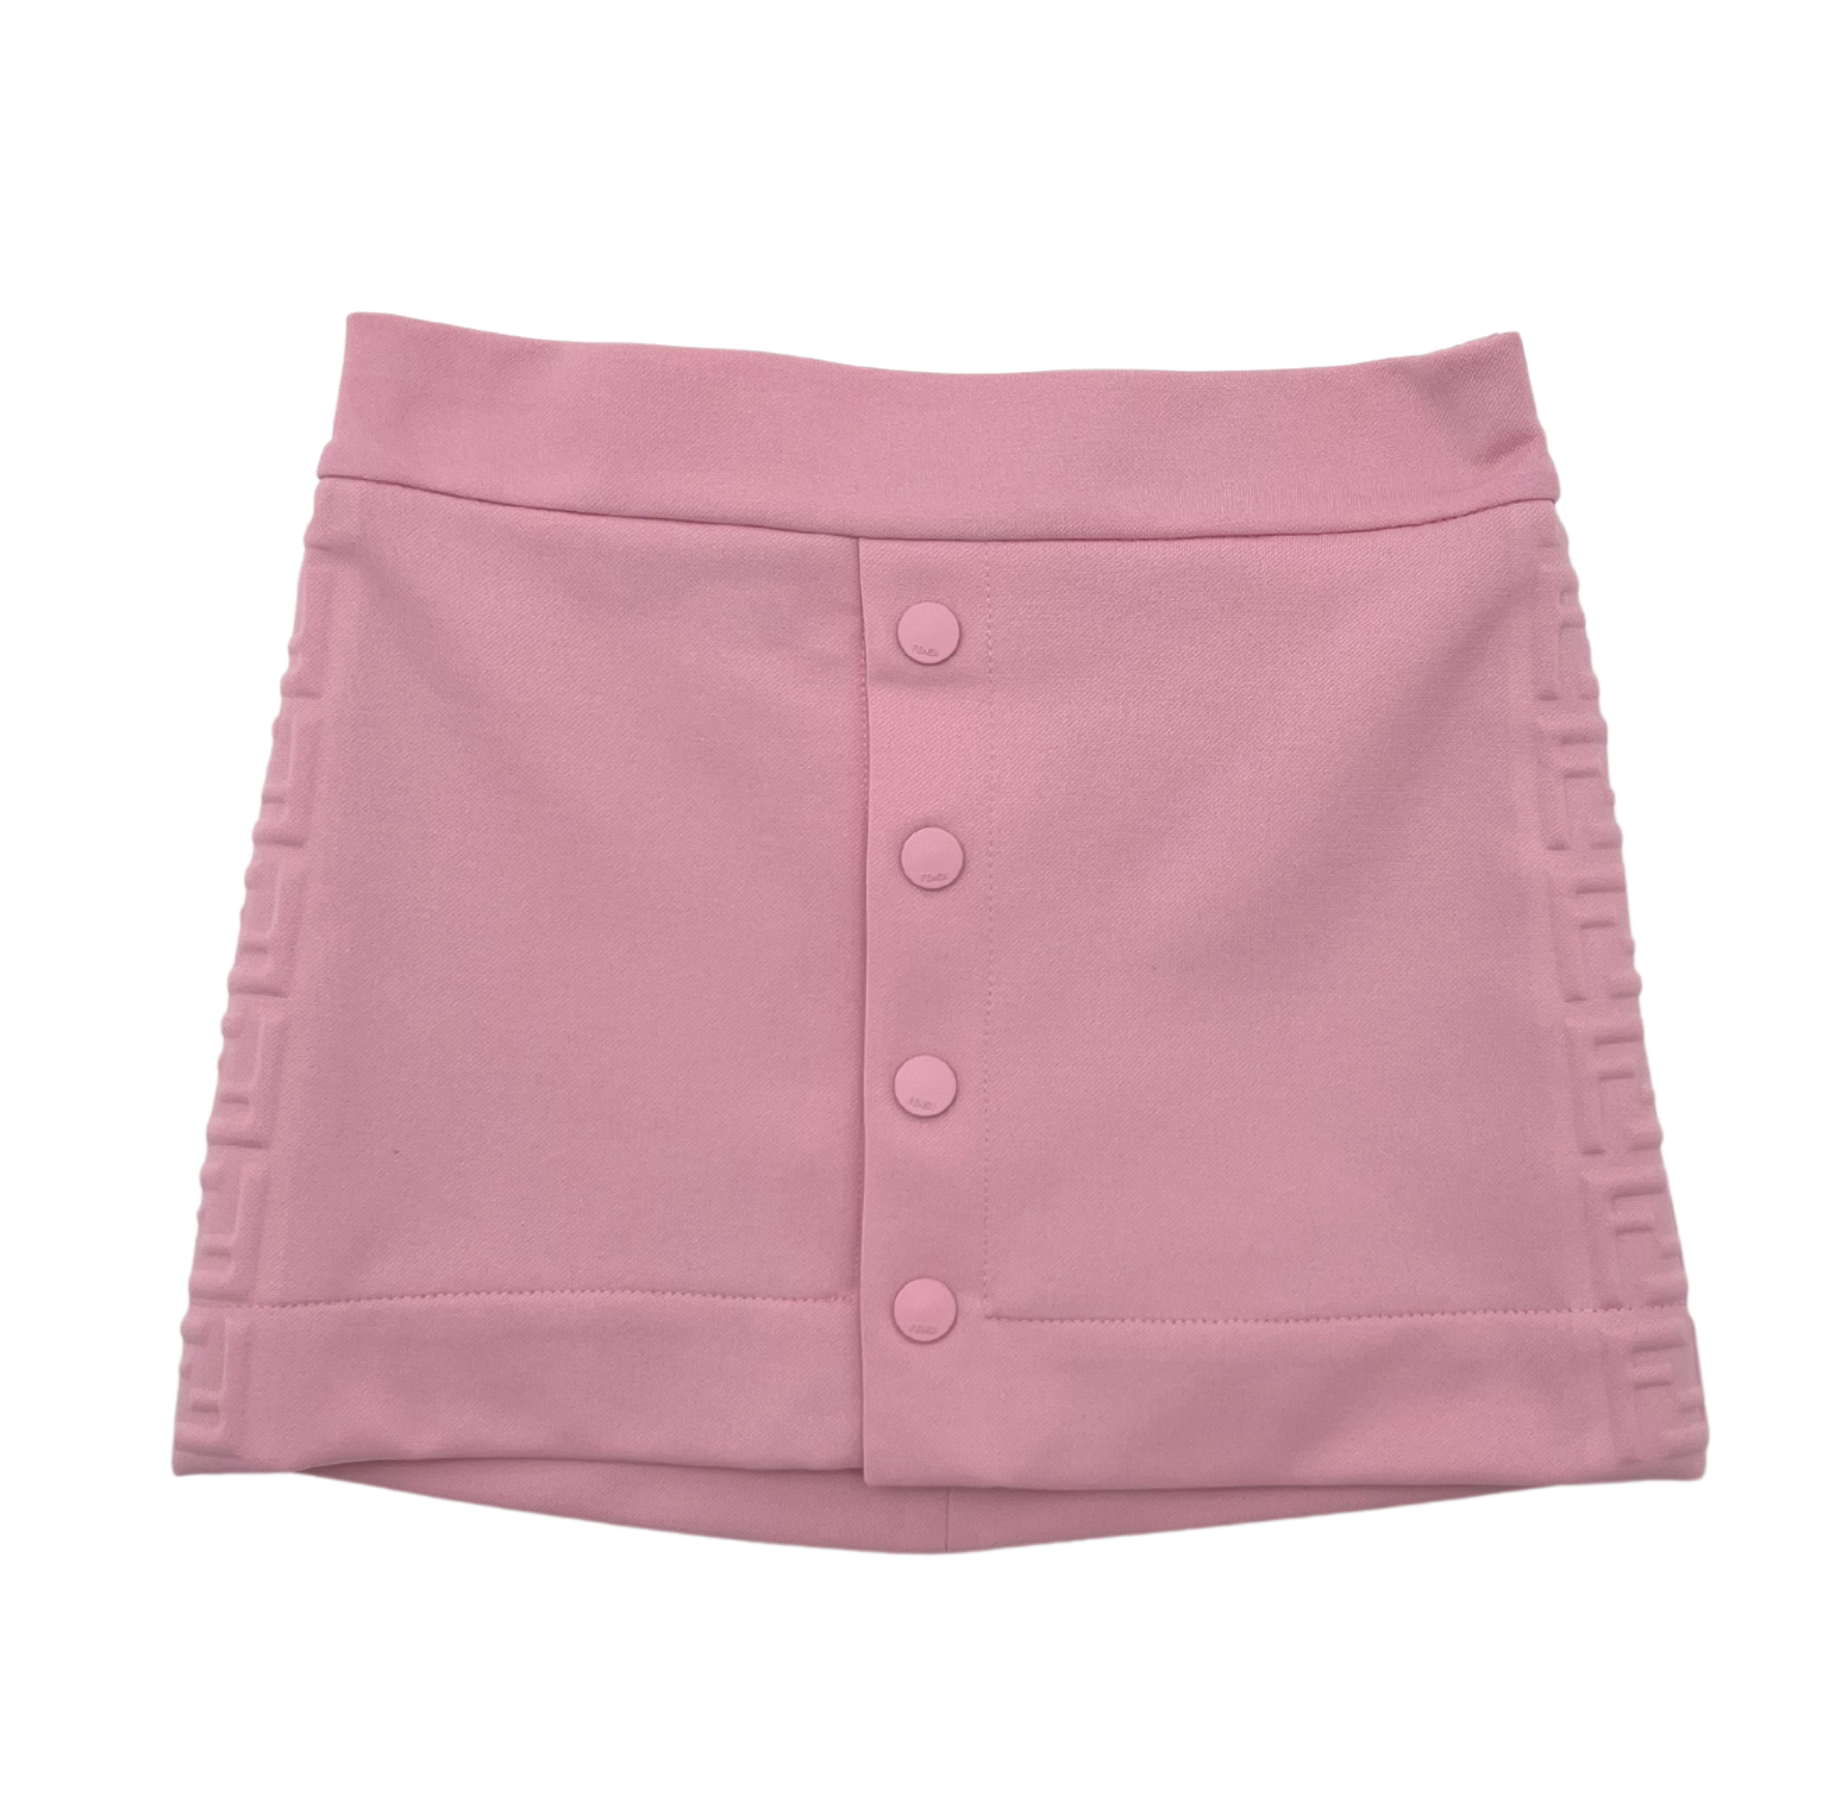 FENDI - Pink skirt - 3 years old